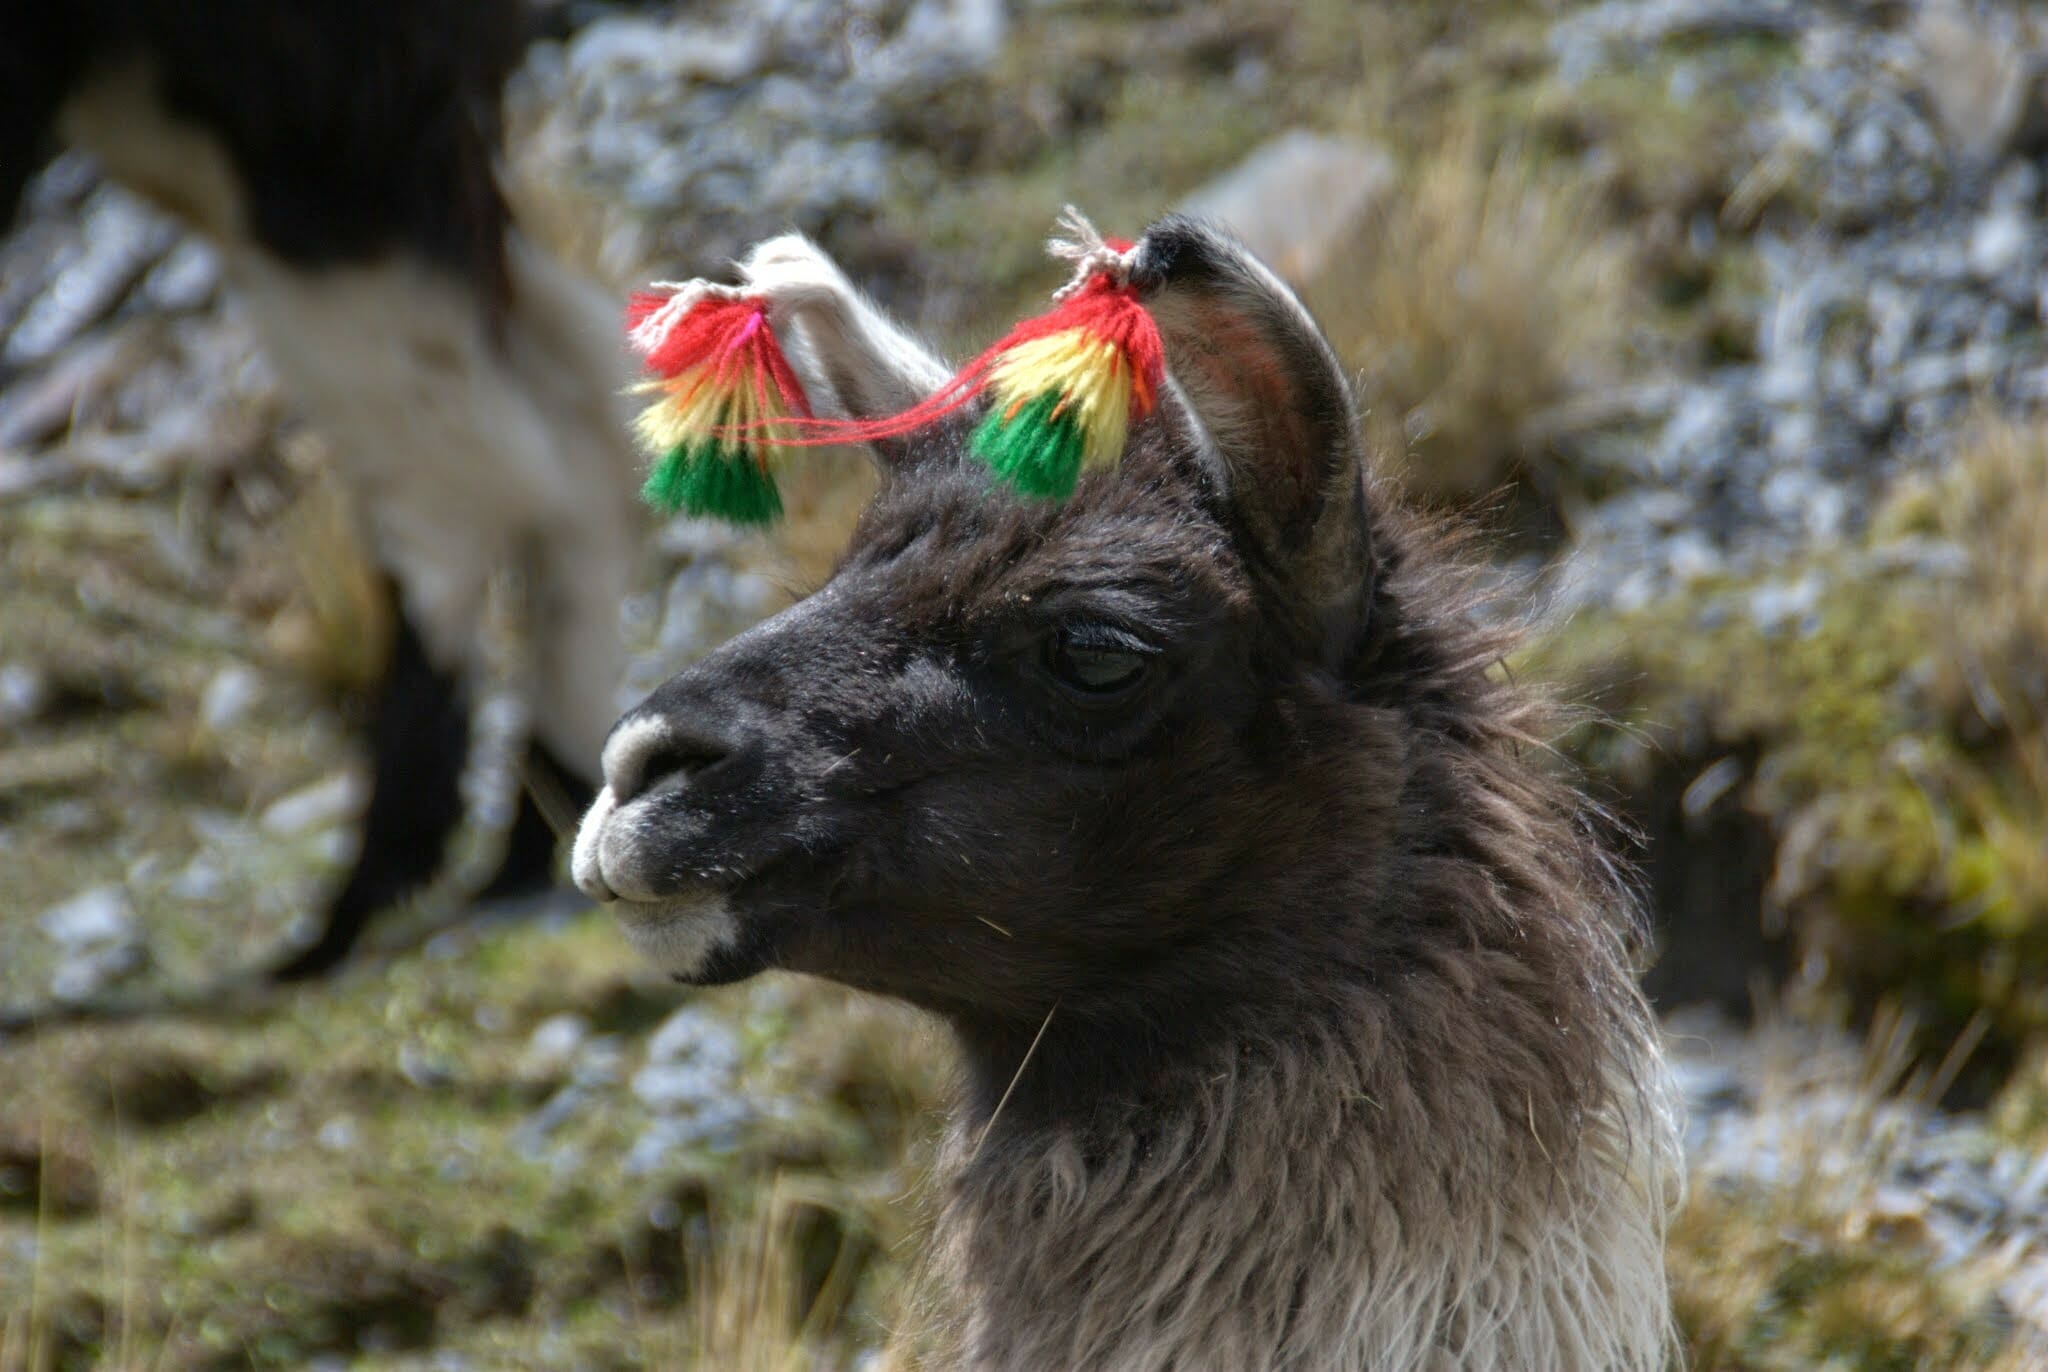 Llama with headdress in Condoriri Bolivia